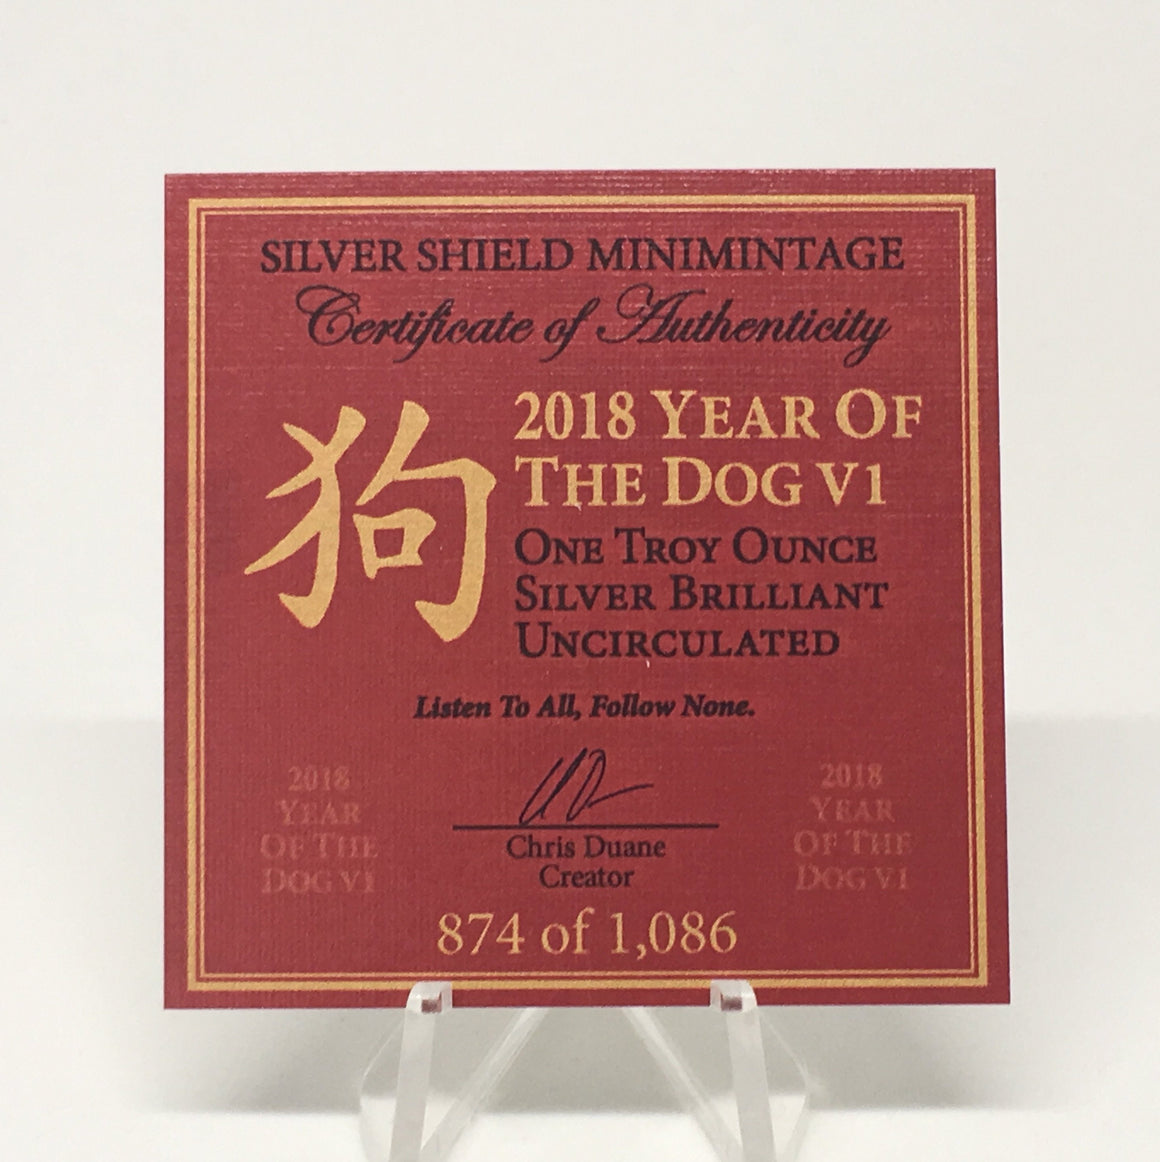 2018 Year of the Dog V1 by Silver Shield, Mini Mintage - BU 1 oz .999 Silver Round